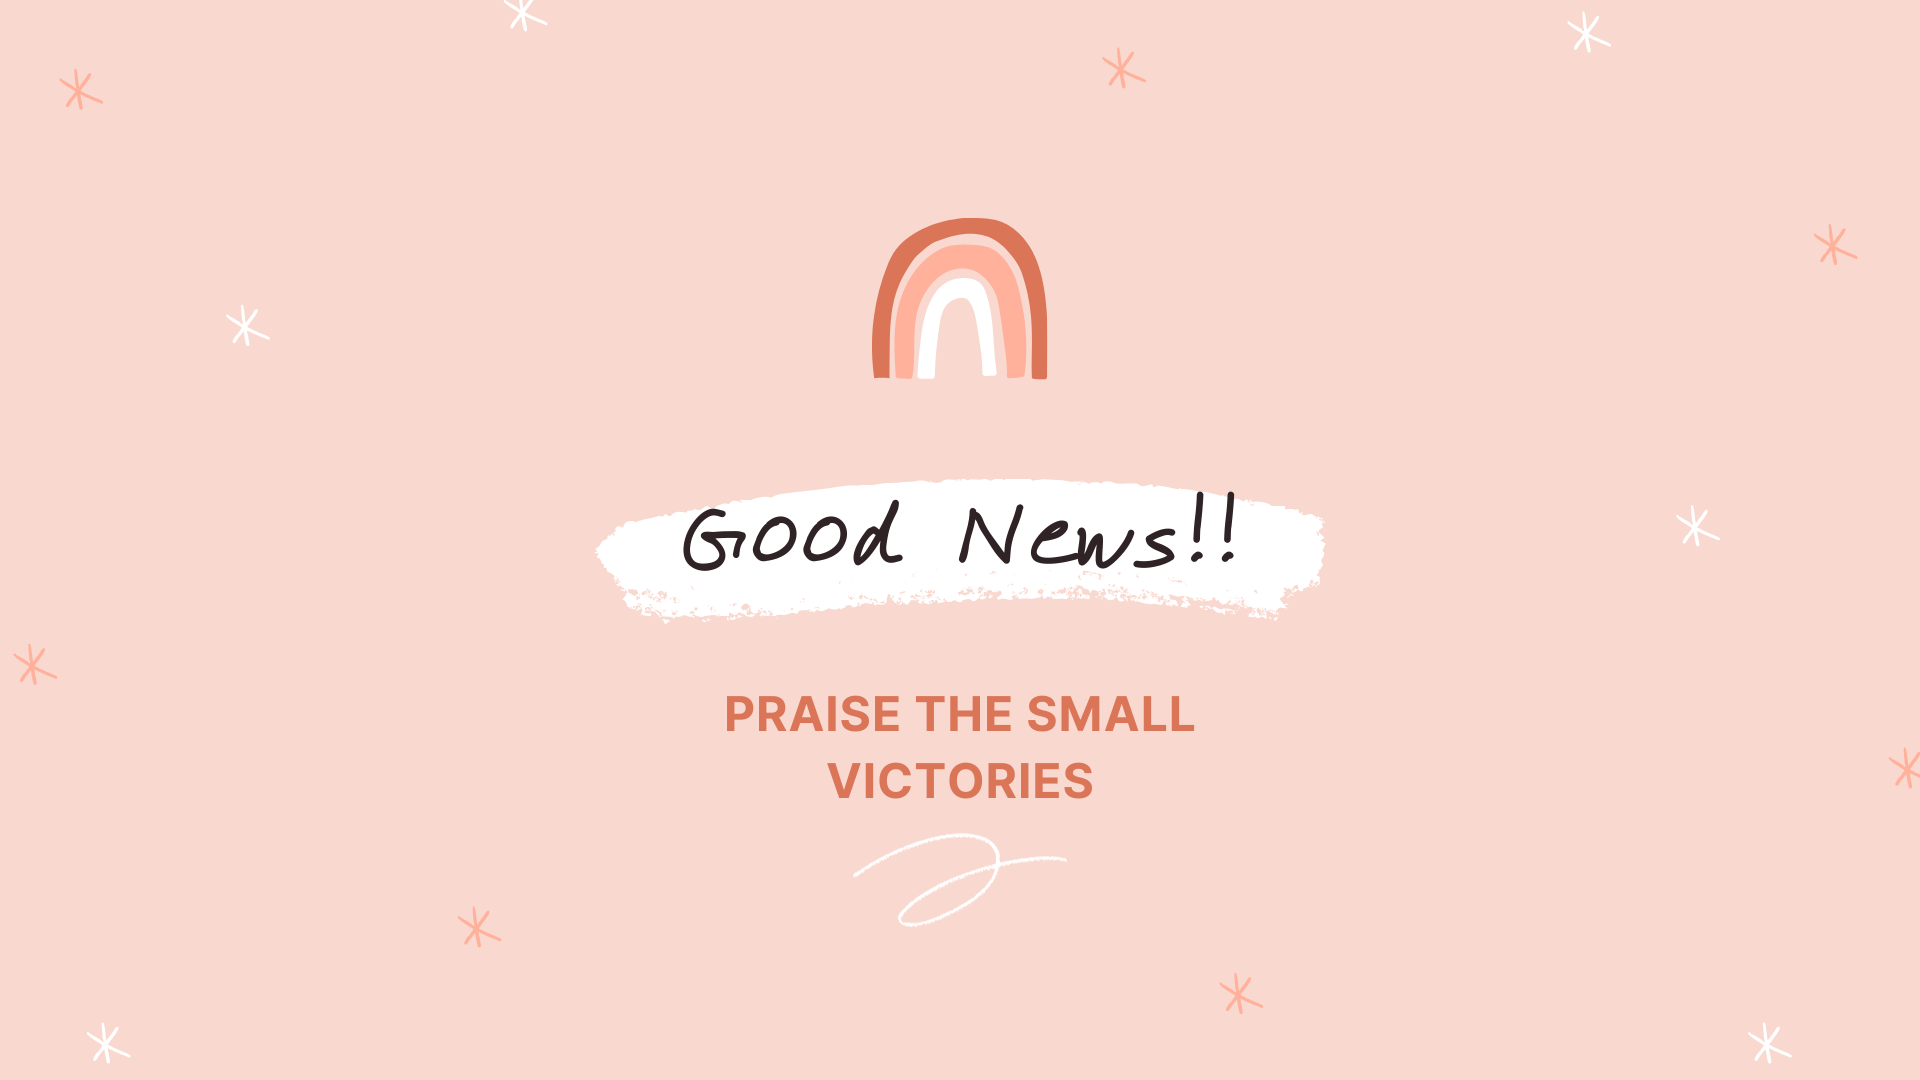 Good news praise small victories